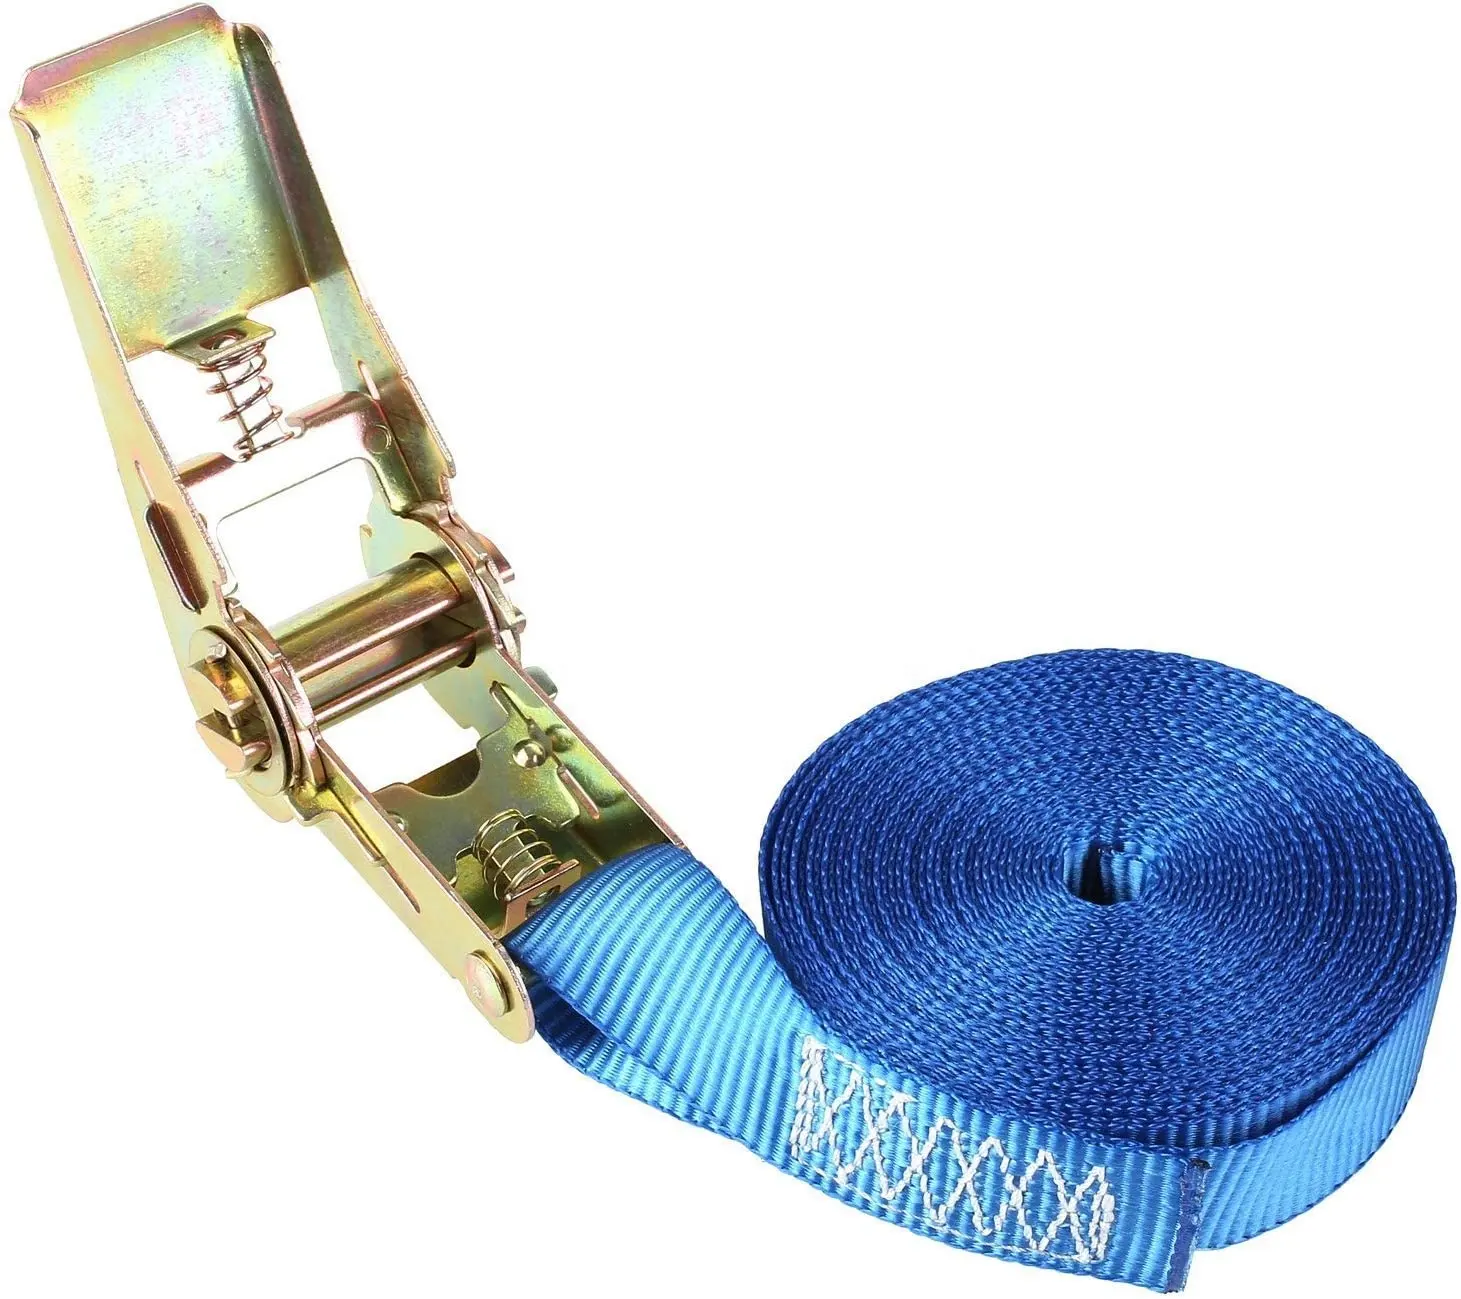 25mm אינסופי מחגר רצועות לכבול ratchets 1 אינץ 1500 £ עניבת מחגר למטה רצועות